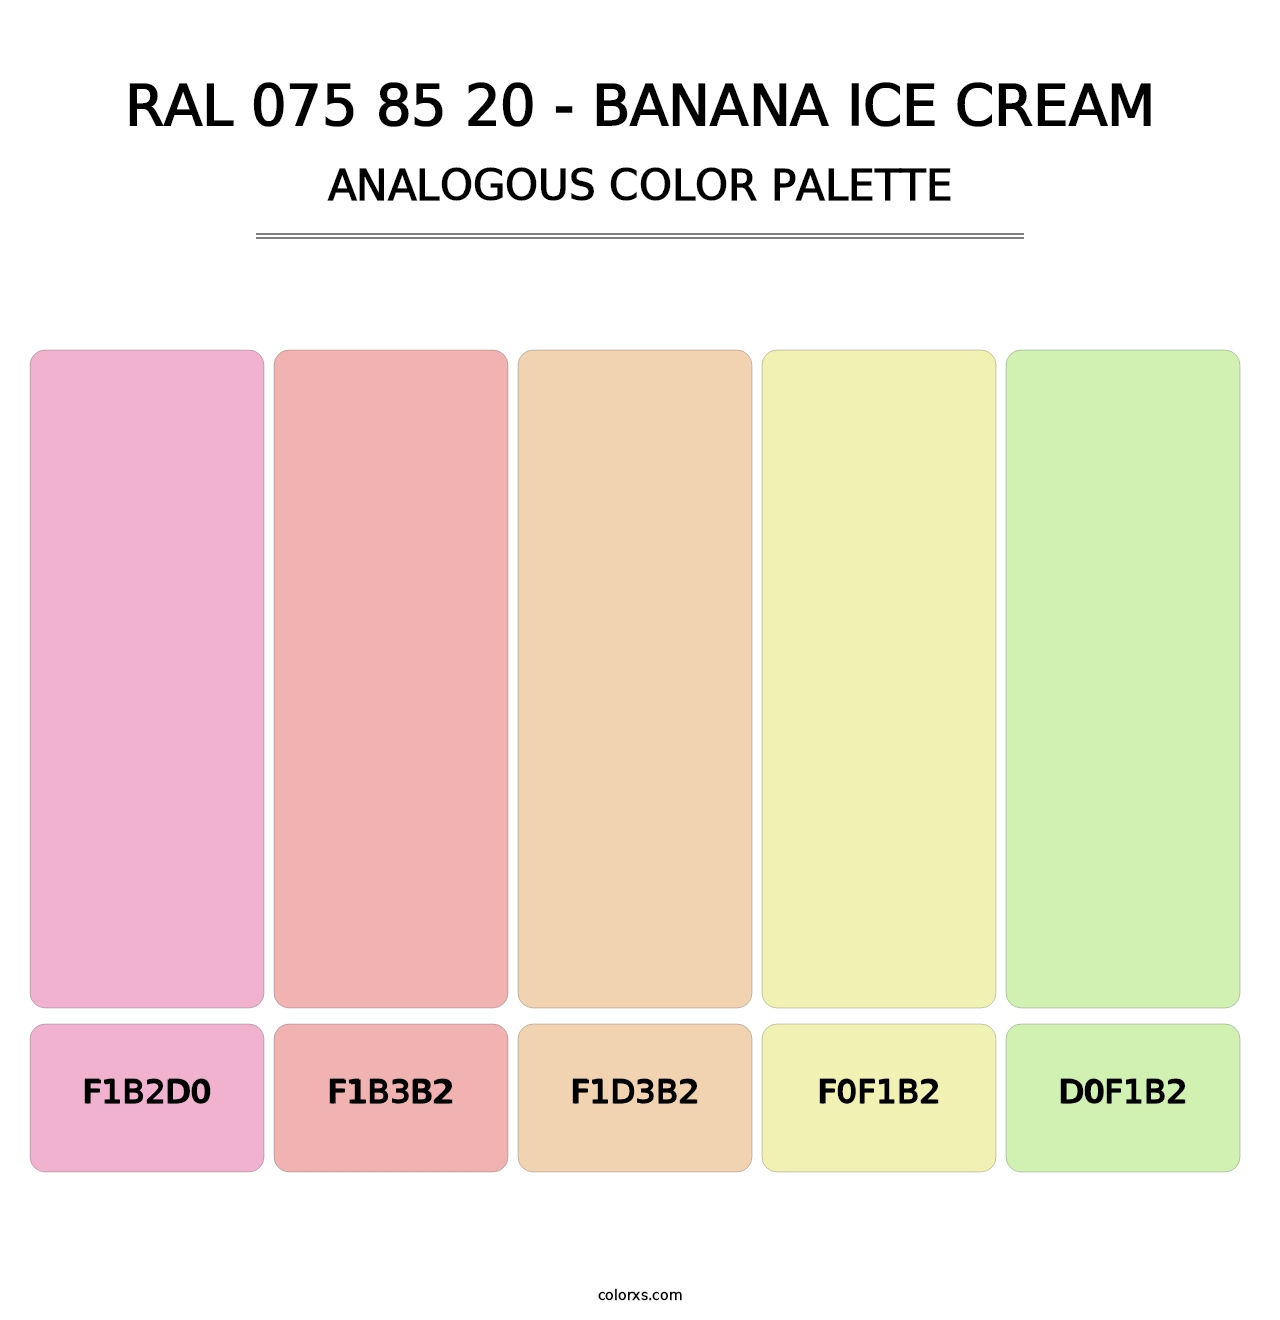 RAL 075 85 20 - Banana Ice Cream - Analogous Color Palette